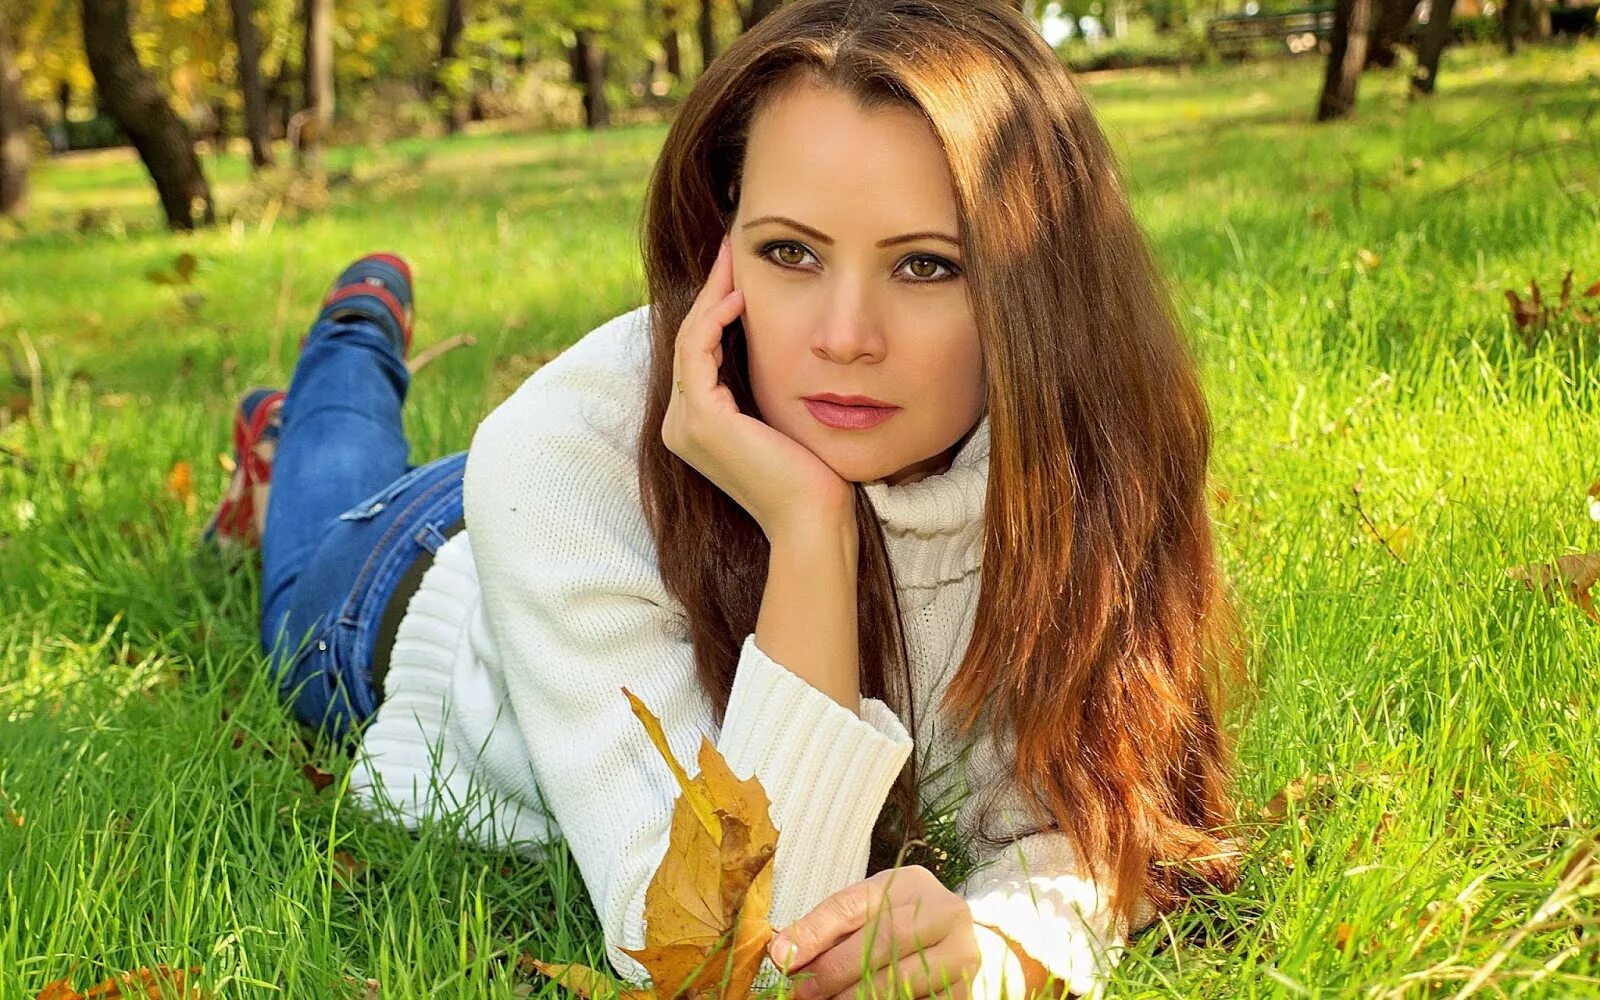 Фотографии девушек простые. Красивые русские девушки. Девушка шатенка. Фотосессия в парке. Красивые девушки на природе.